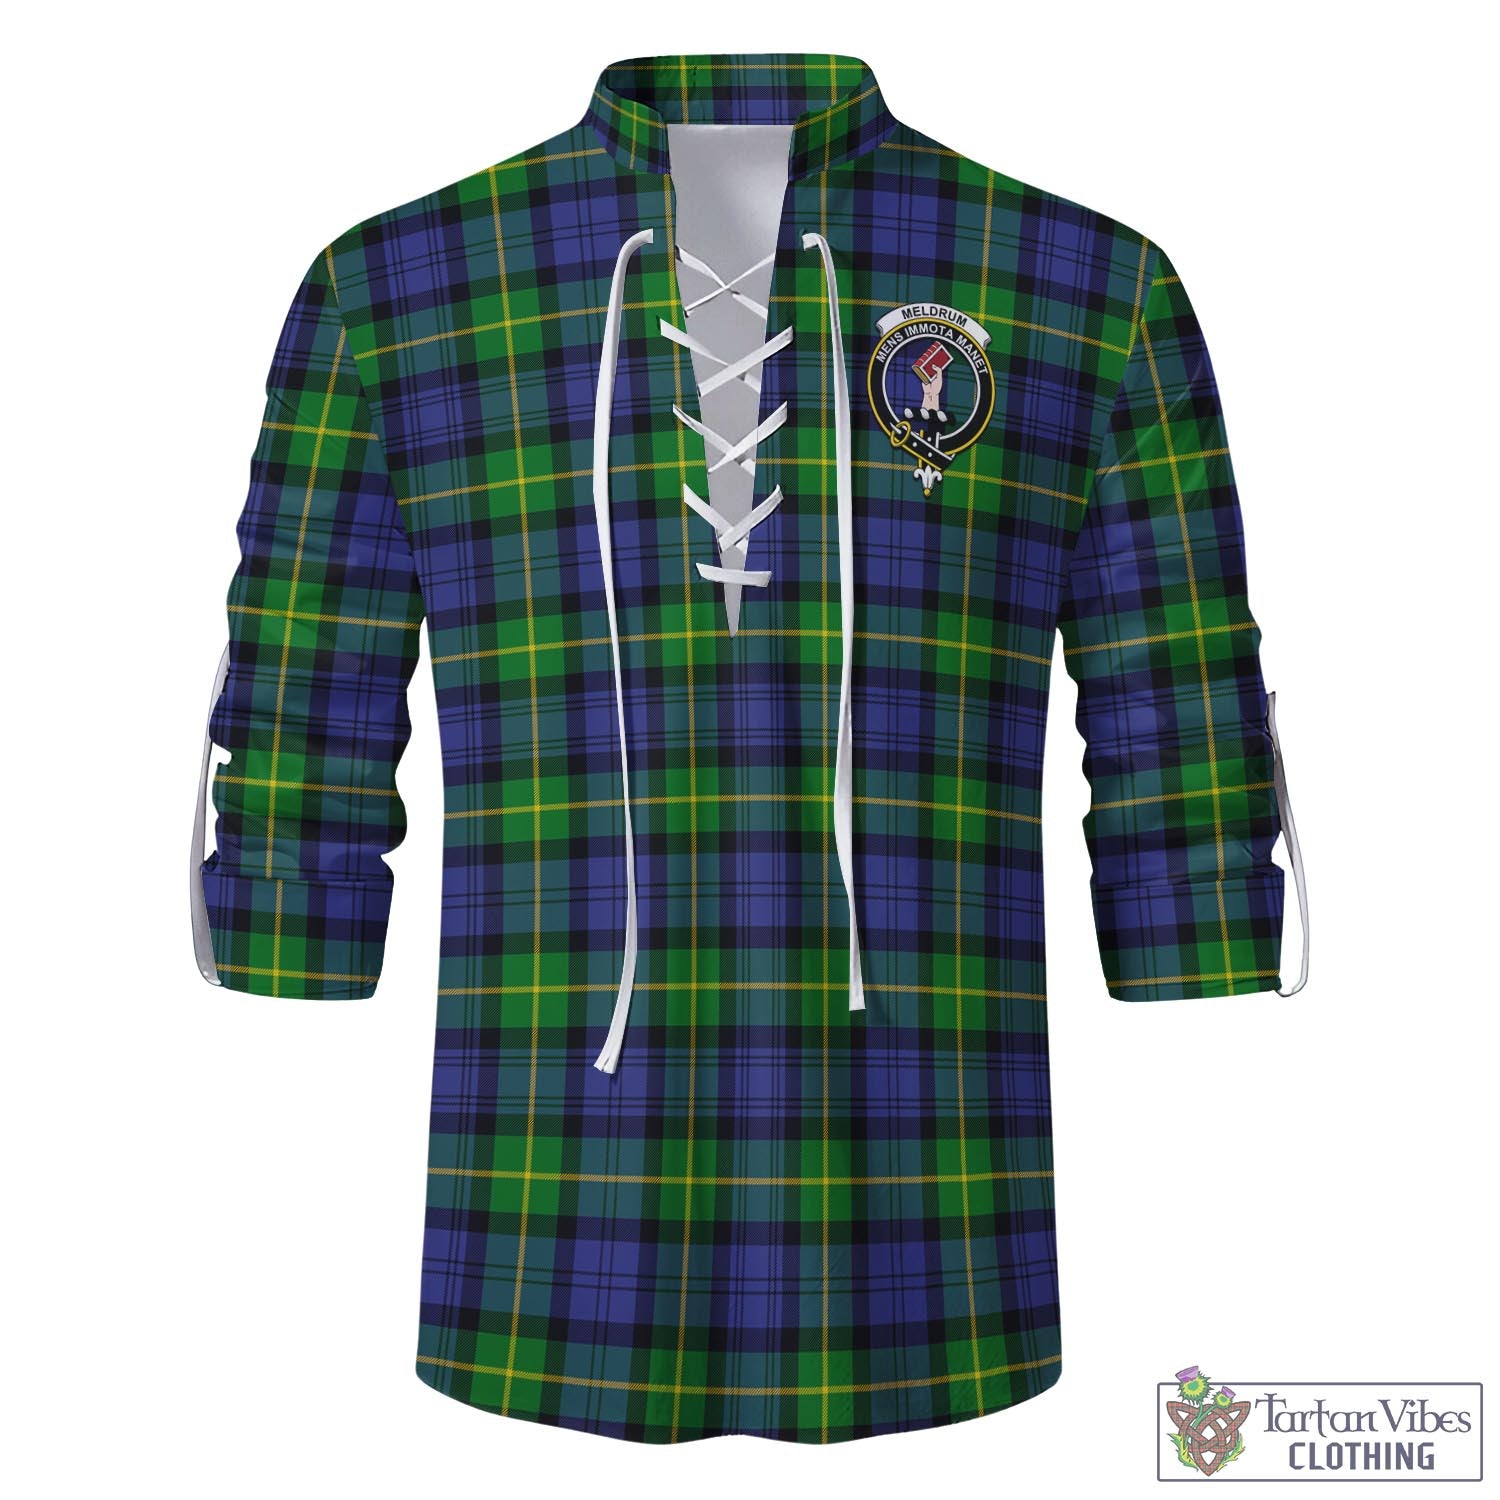 Tartan Vibes Clothing Meldrum Tartan Men's Scottish Traditional Jacobite Ghillie Kilt Shirt with Family Crest